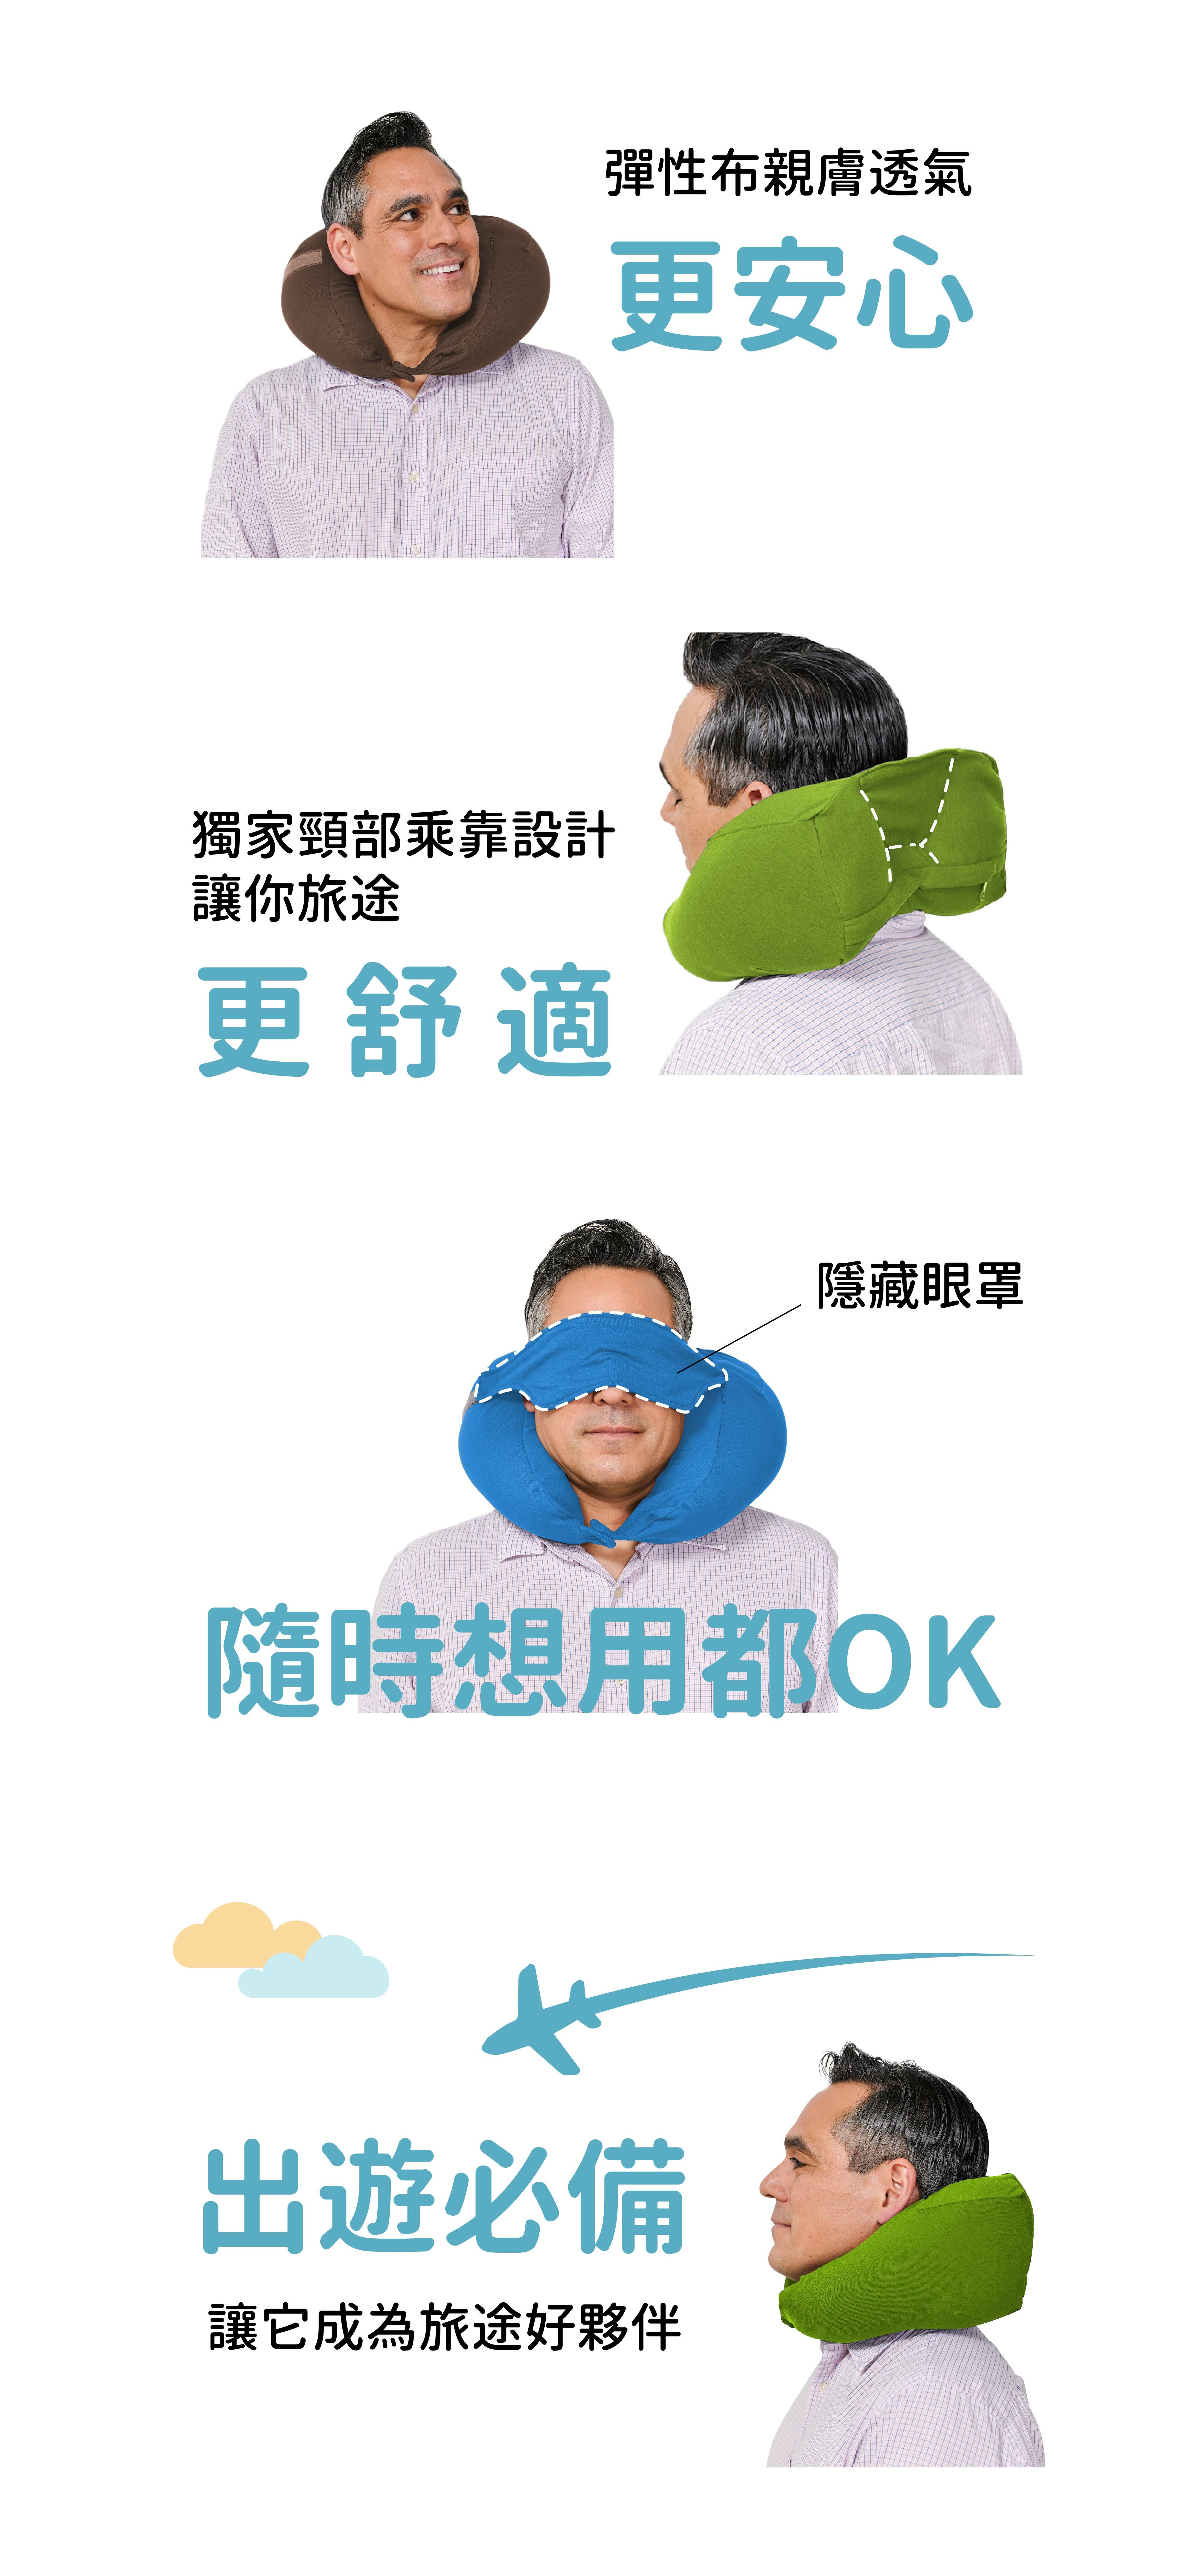 Nap X: Ergonomic Neck Pillow with Eye Mask - Yogibo®